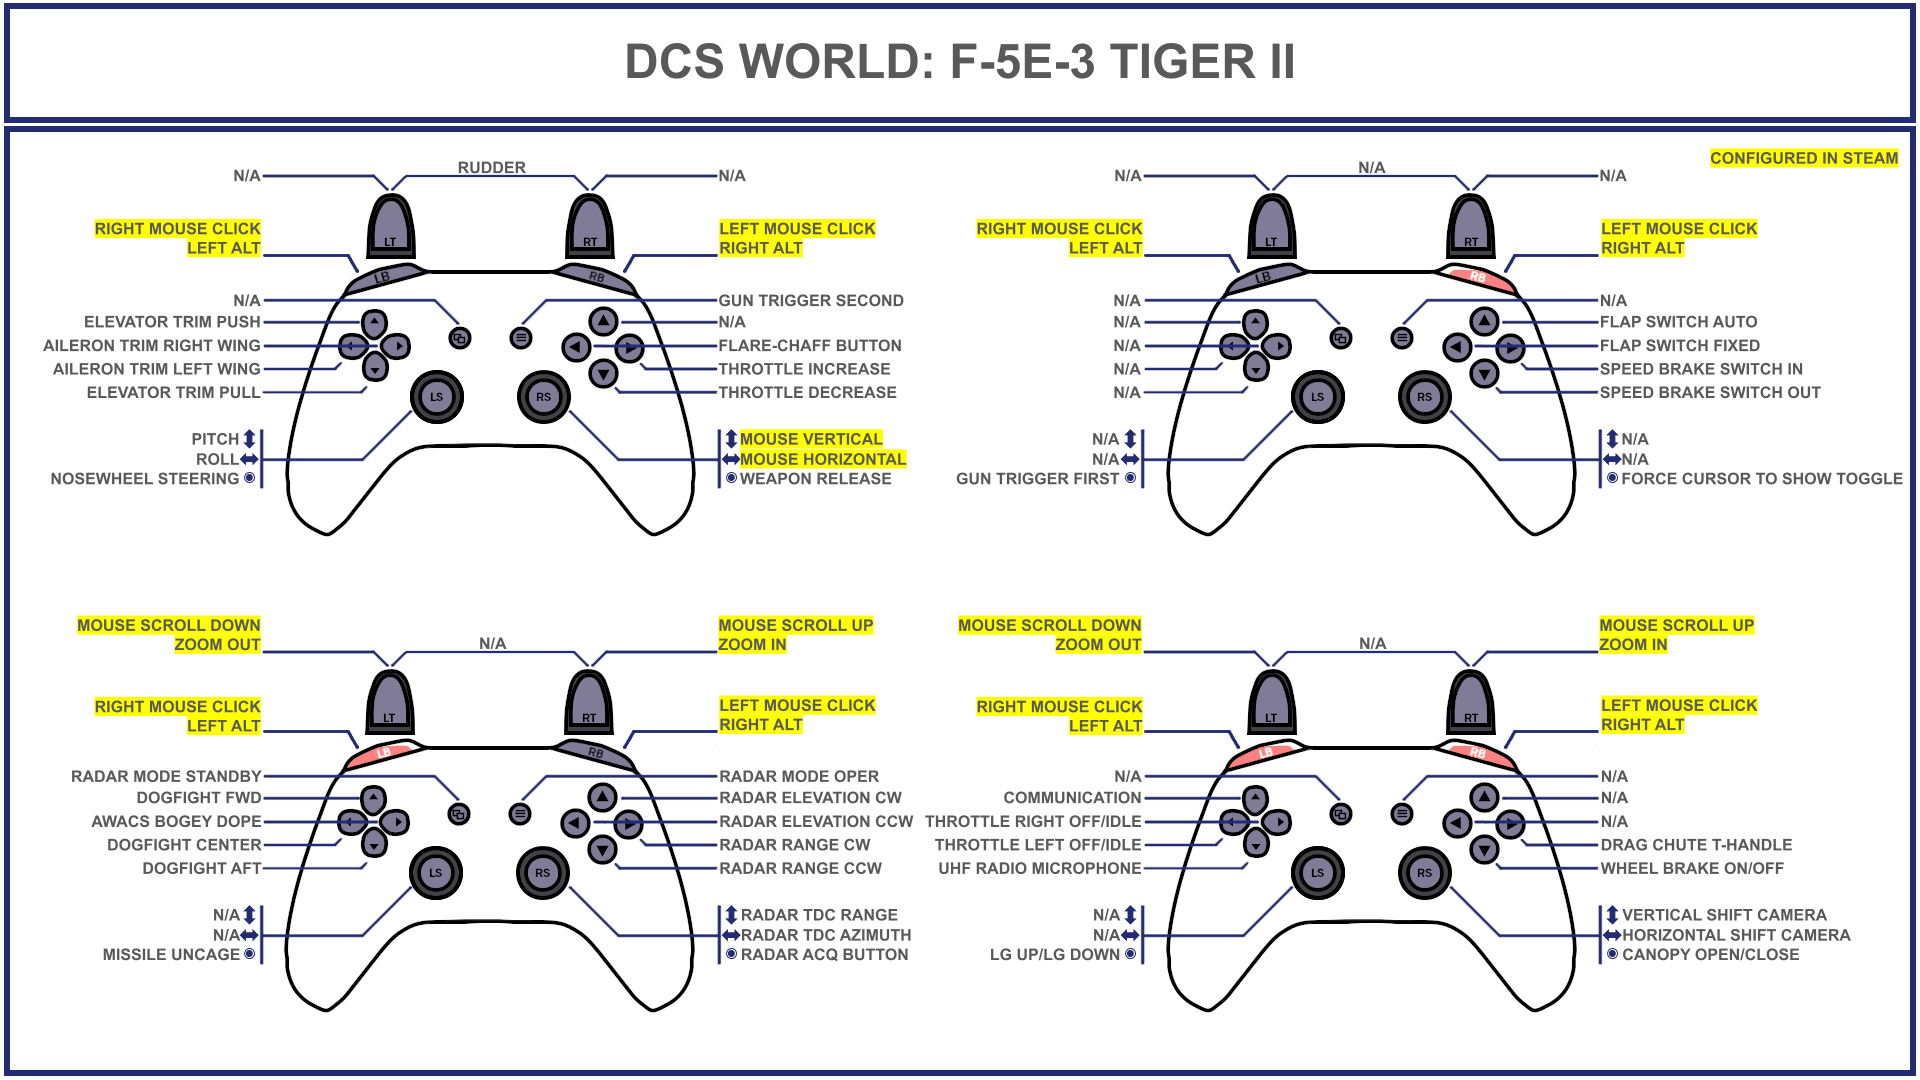 Tuuvas' Official F-5E-3 Tiger II Gamepad Controller Layout